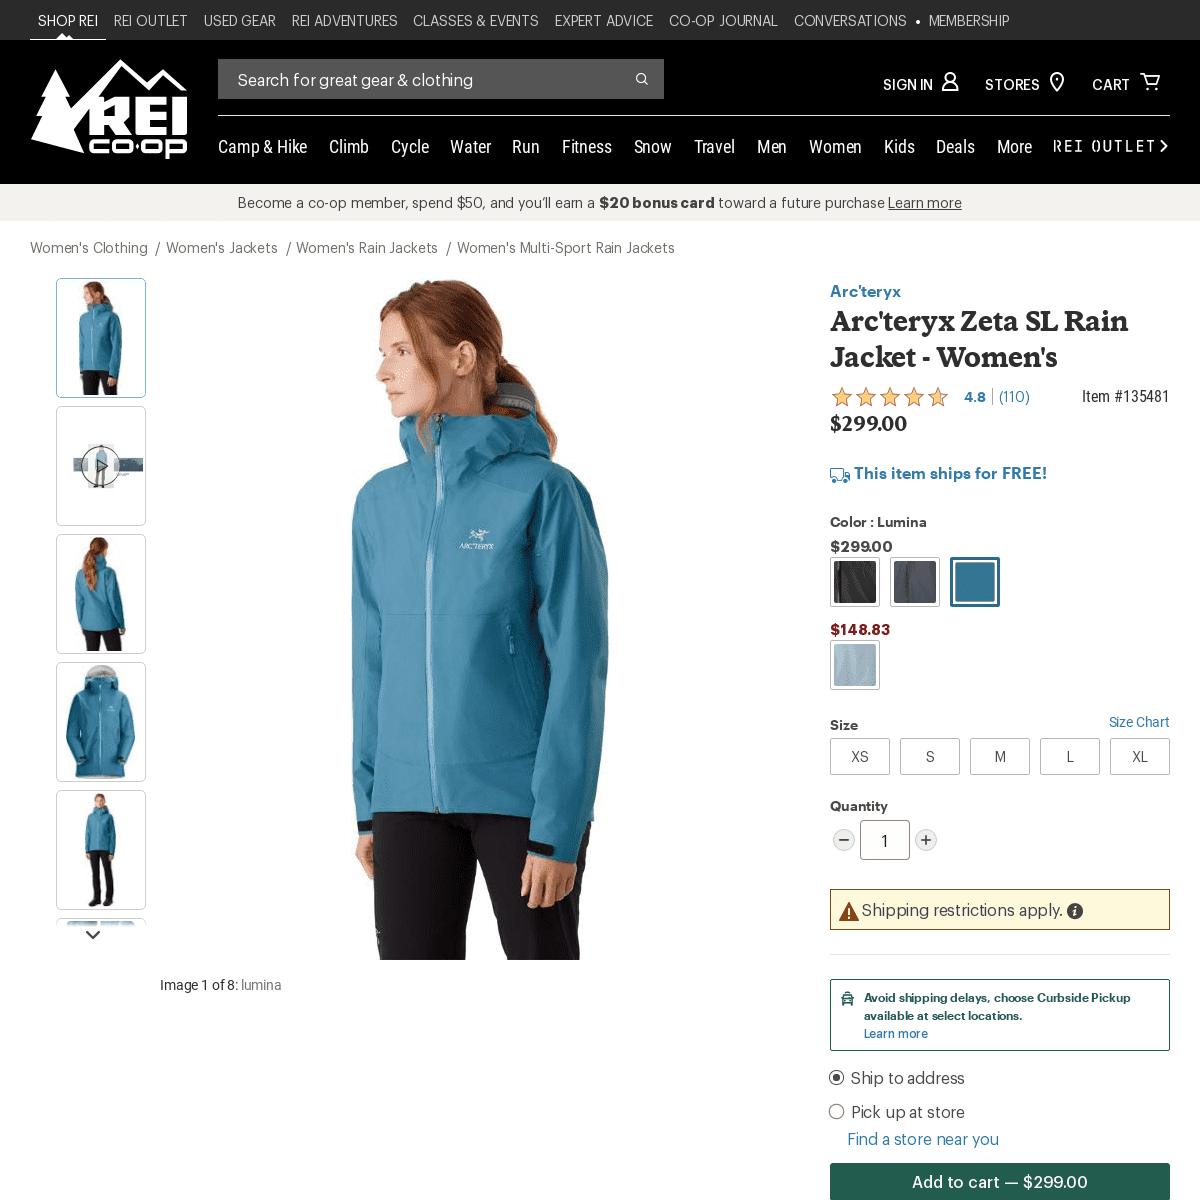 A complete backup of https://www.rei.com/product/135481/arcteryx-zeta-sl-rain-jacket-womens